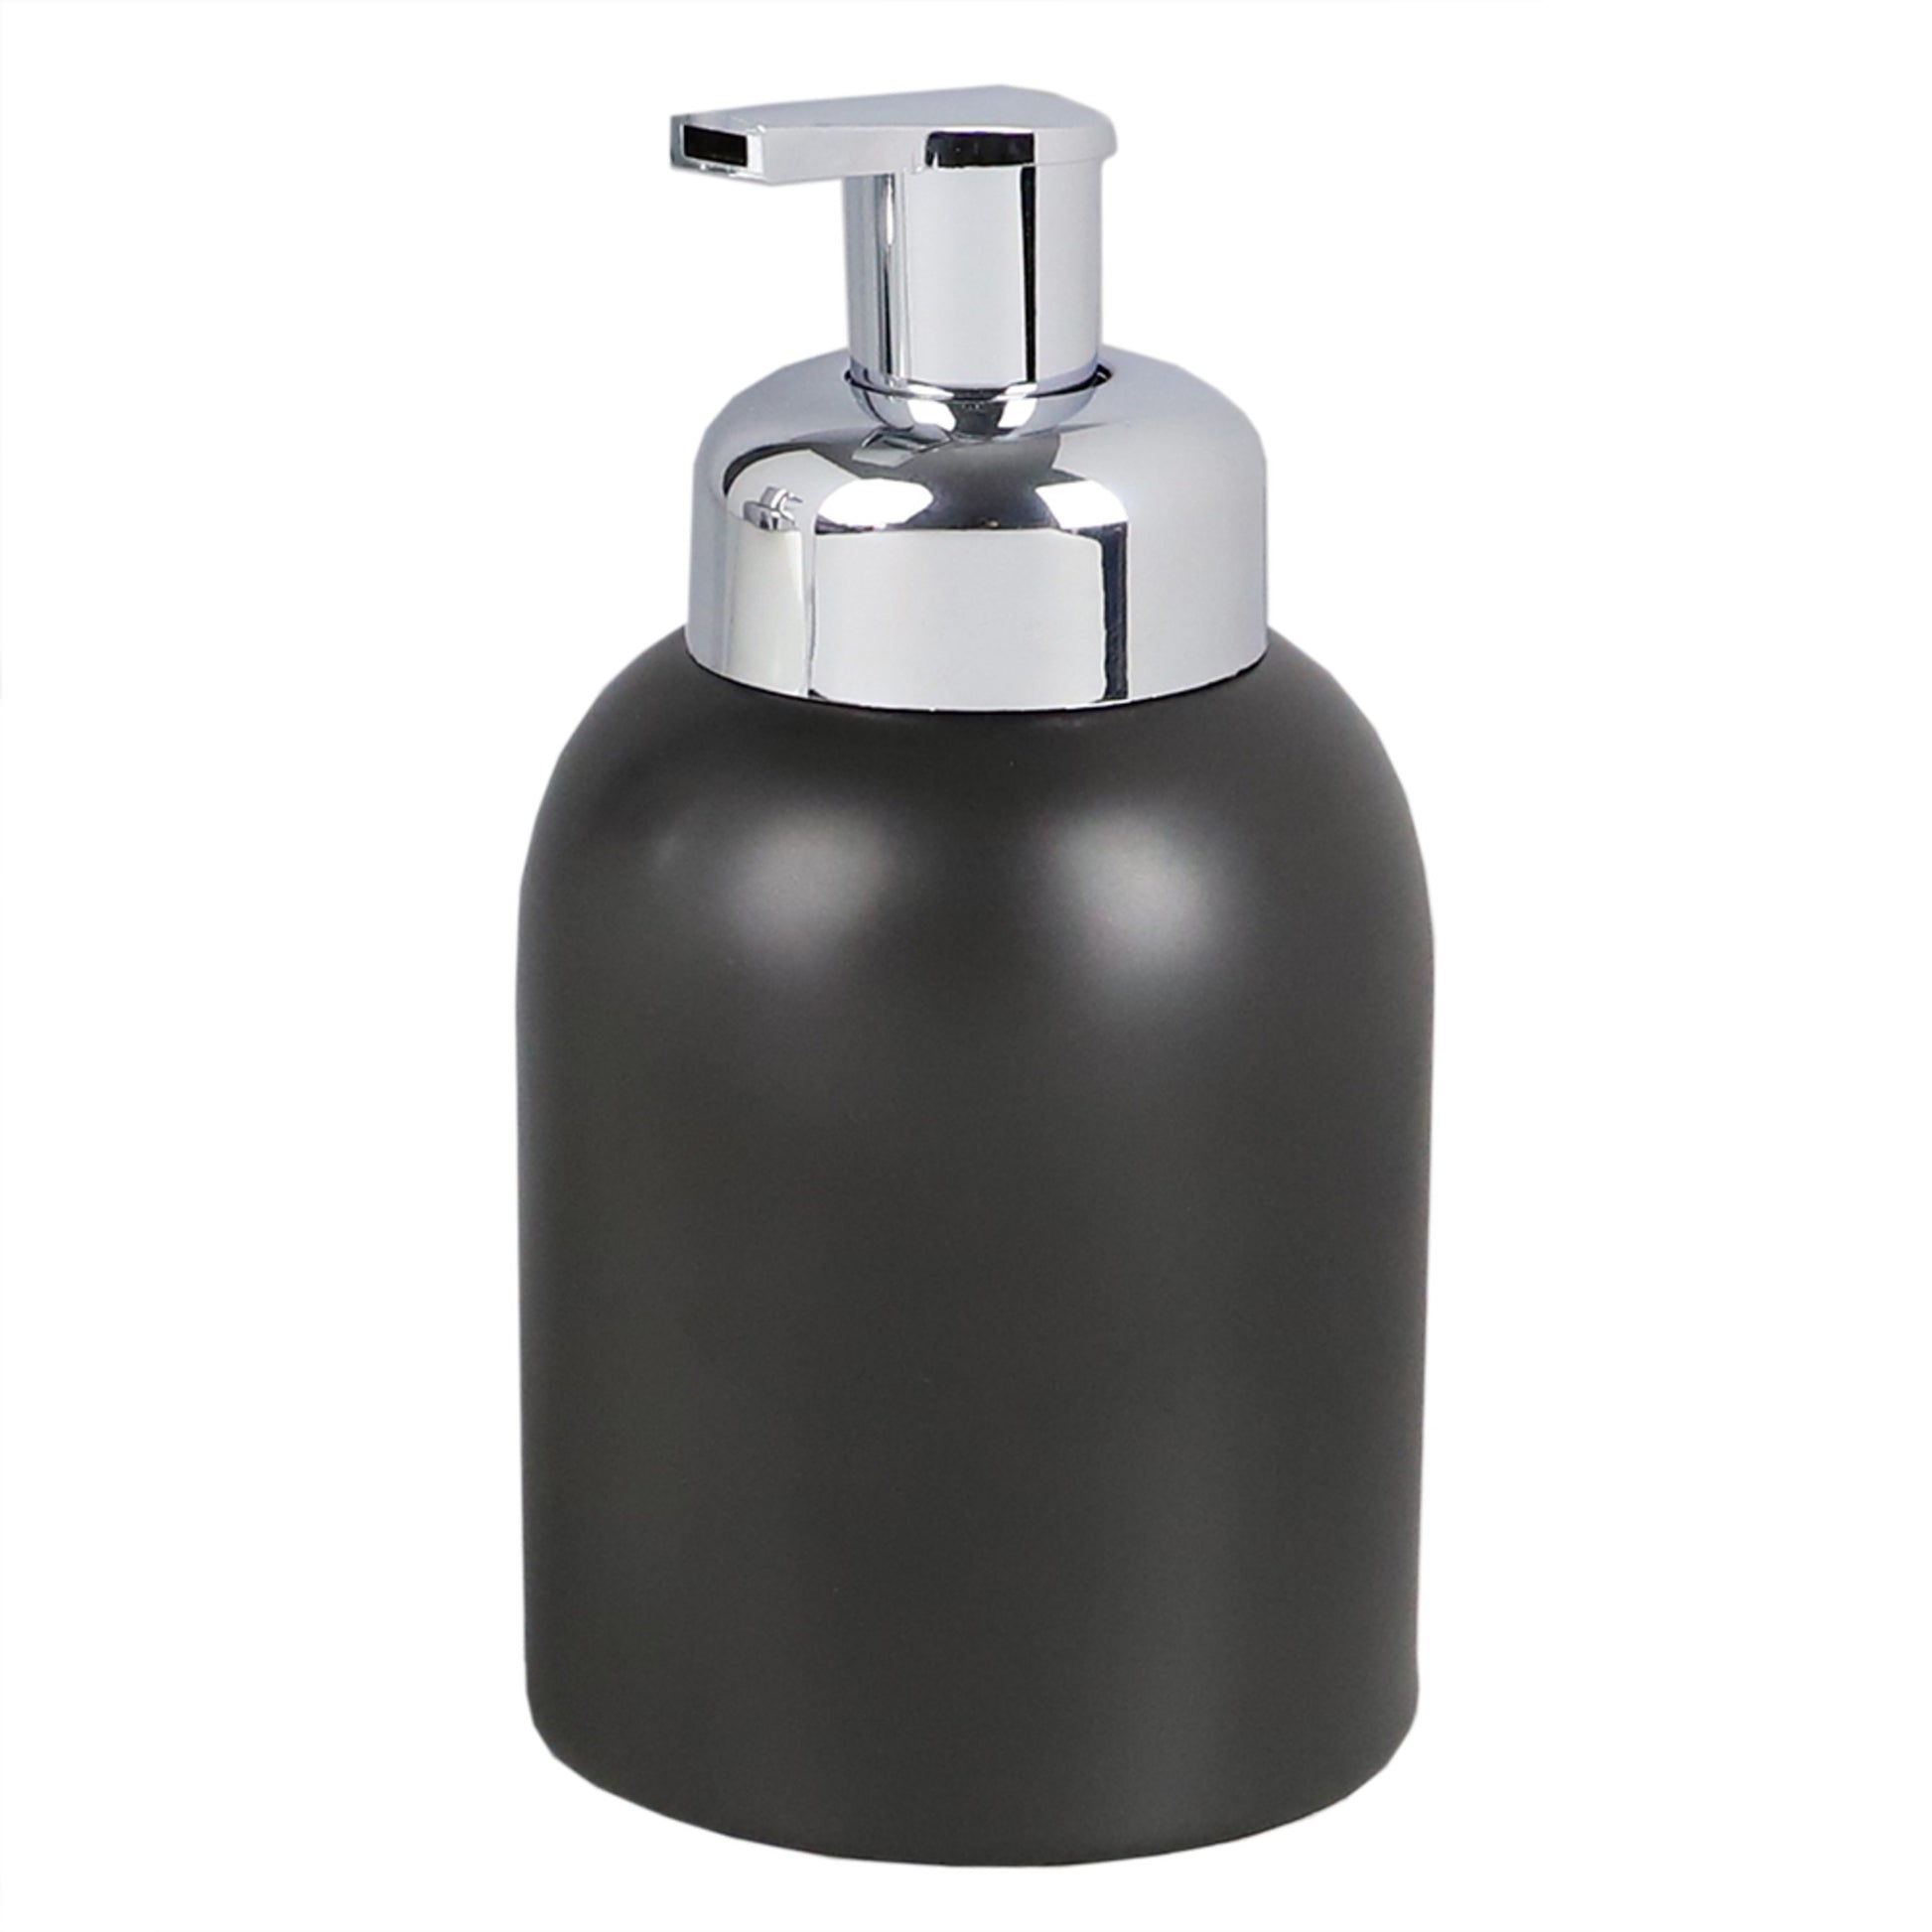 Home Basics 13.5 oz. Foaming Ceramic Soap Dispenser, Black - Black